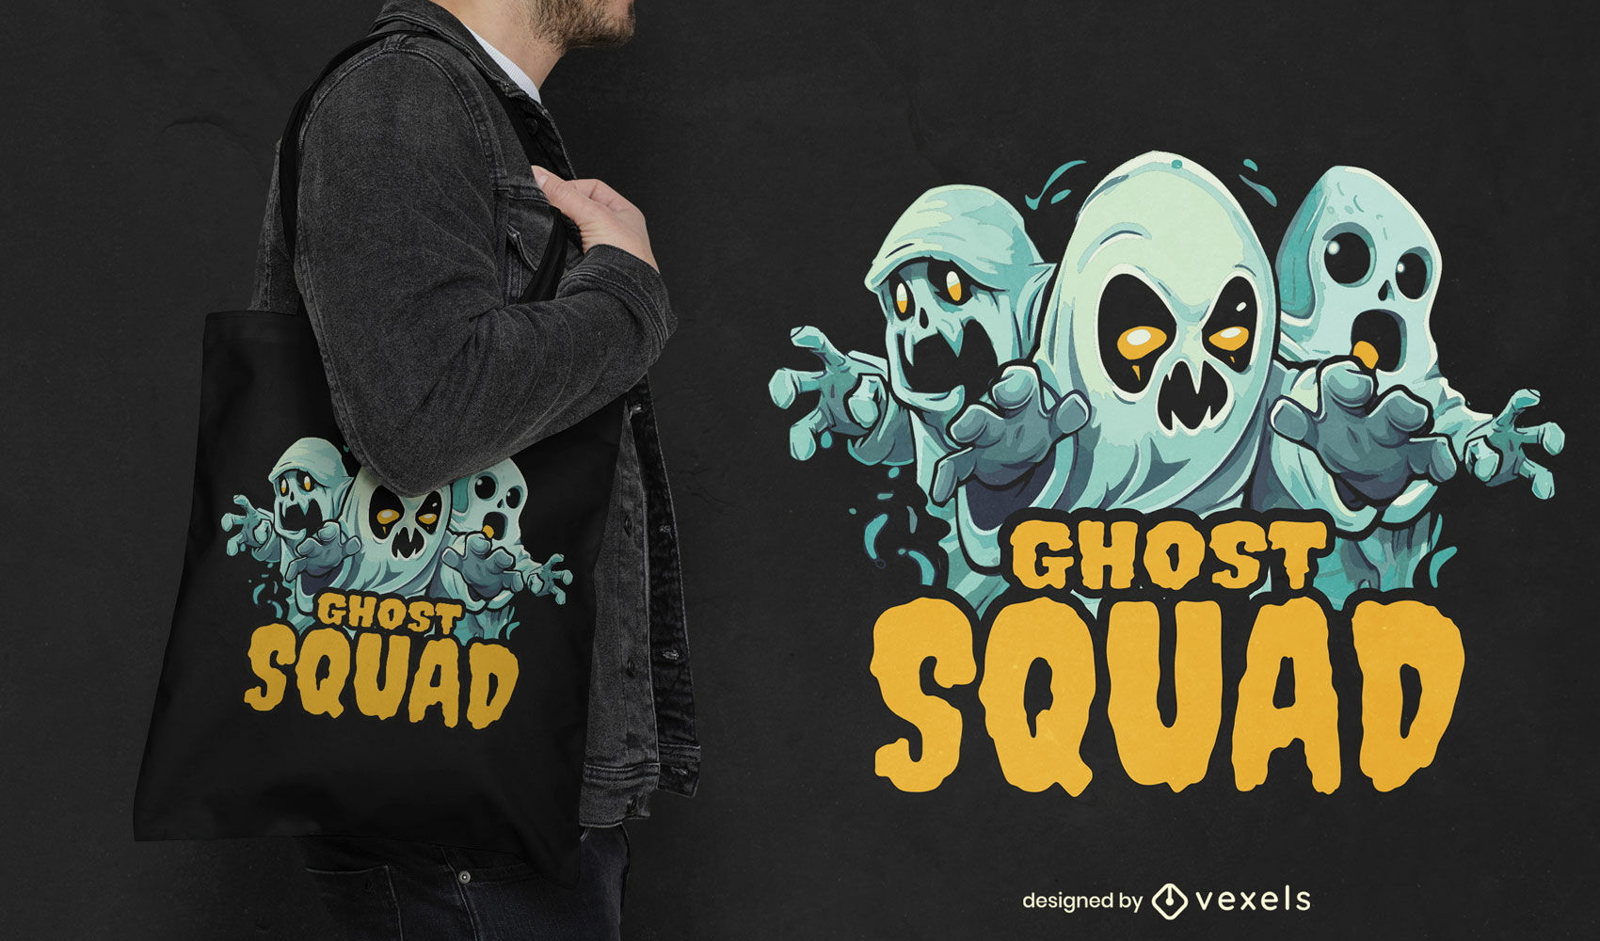 Ghost squad tote bag design